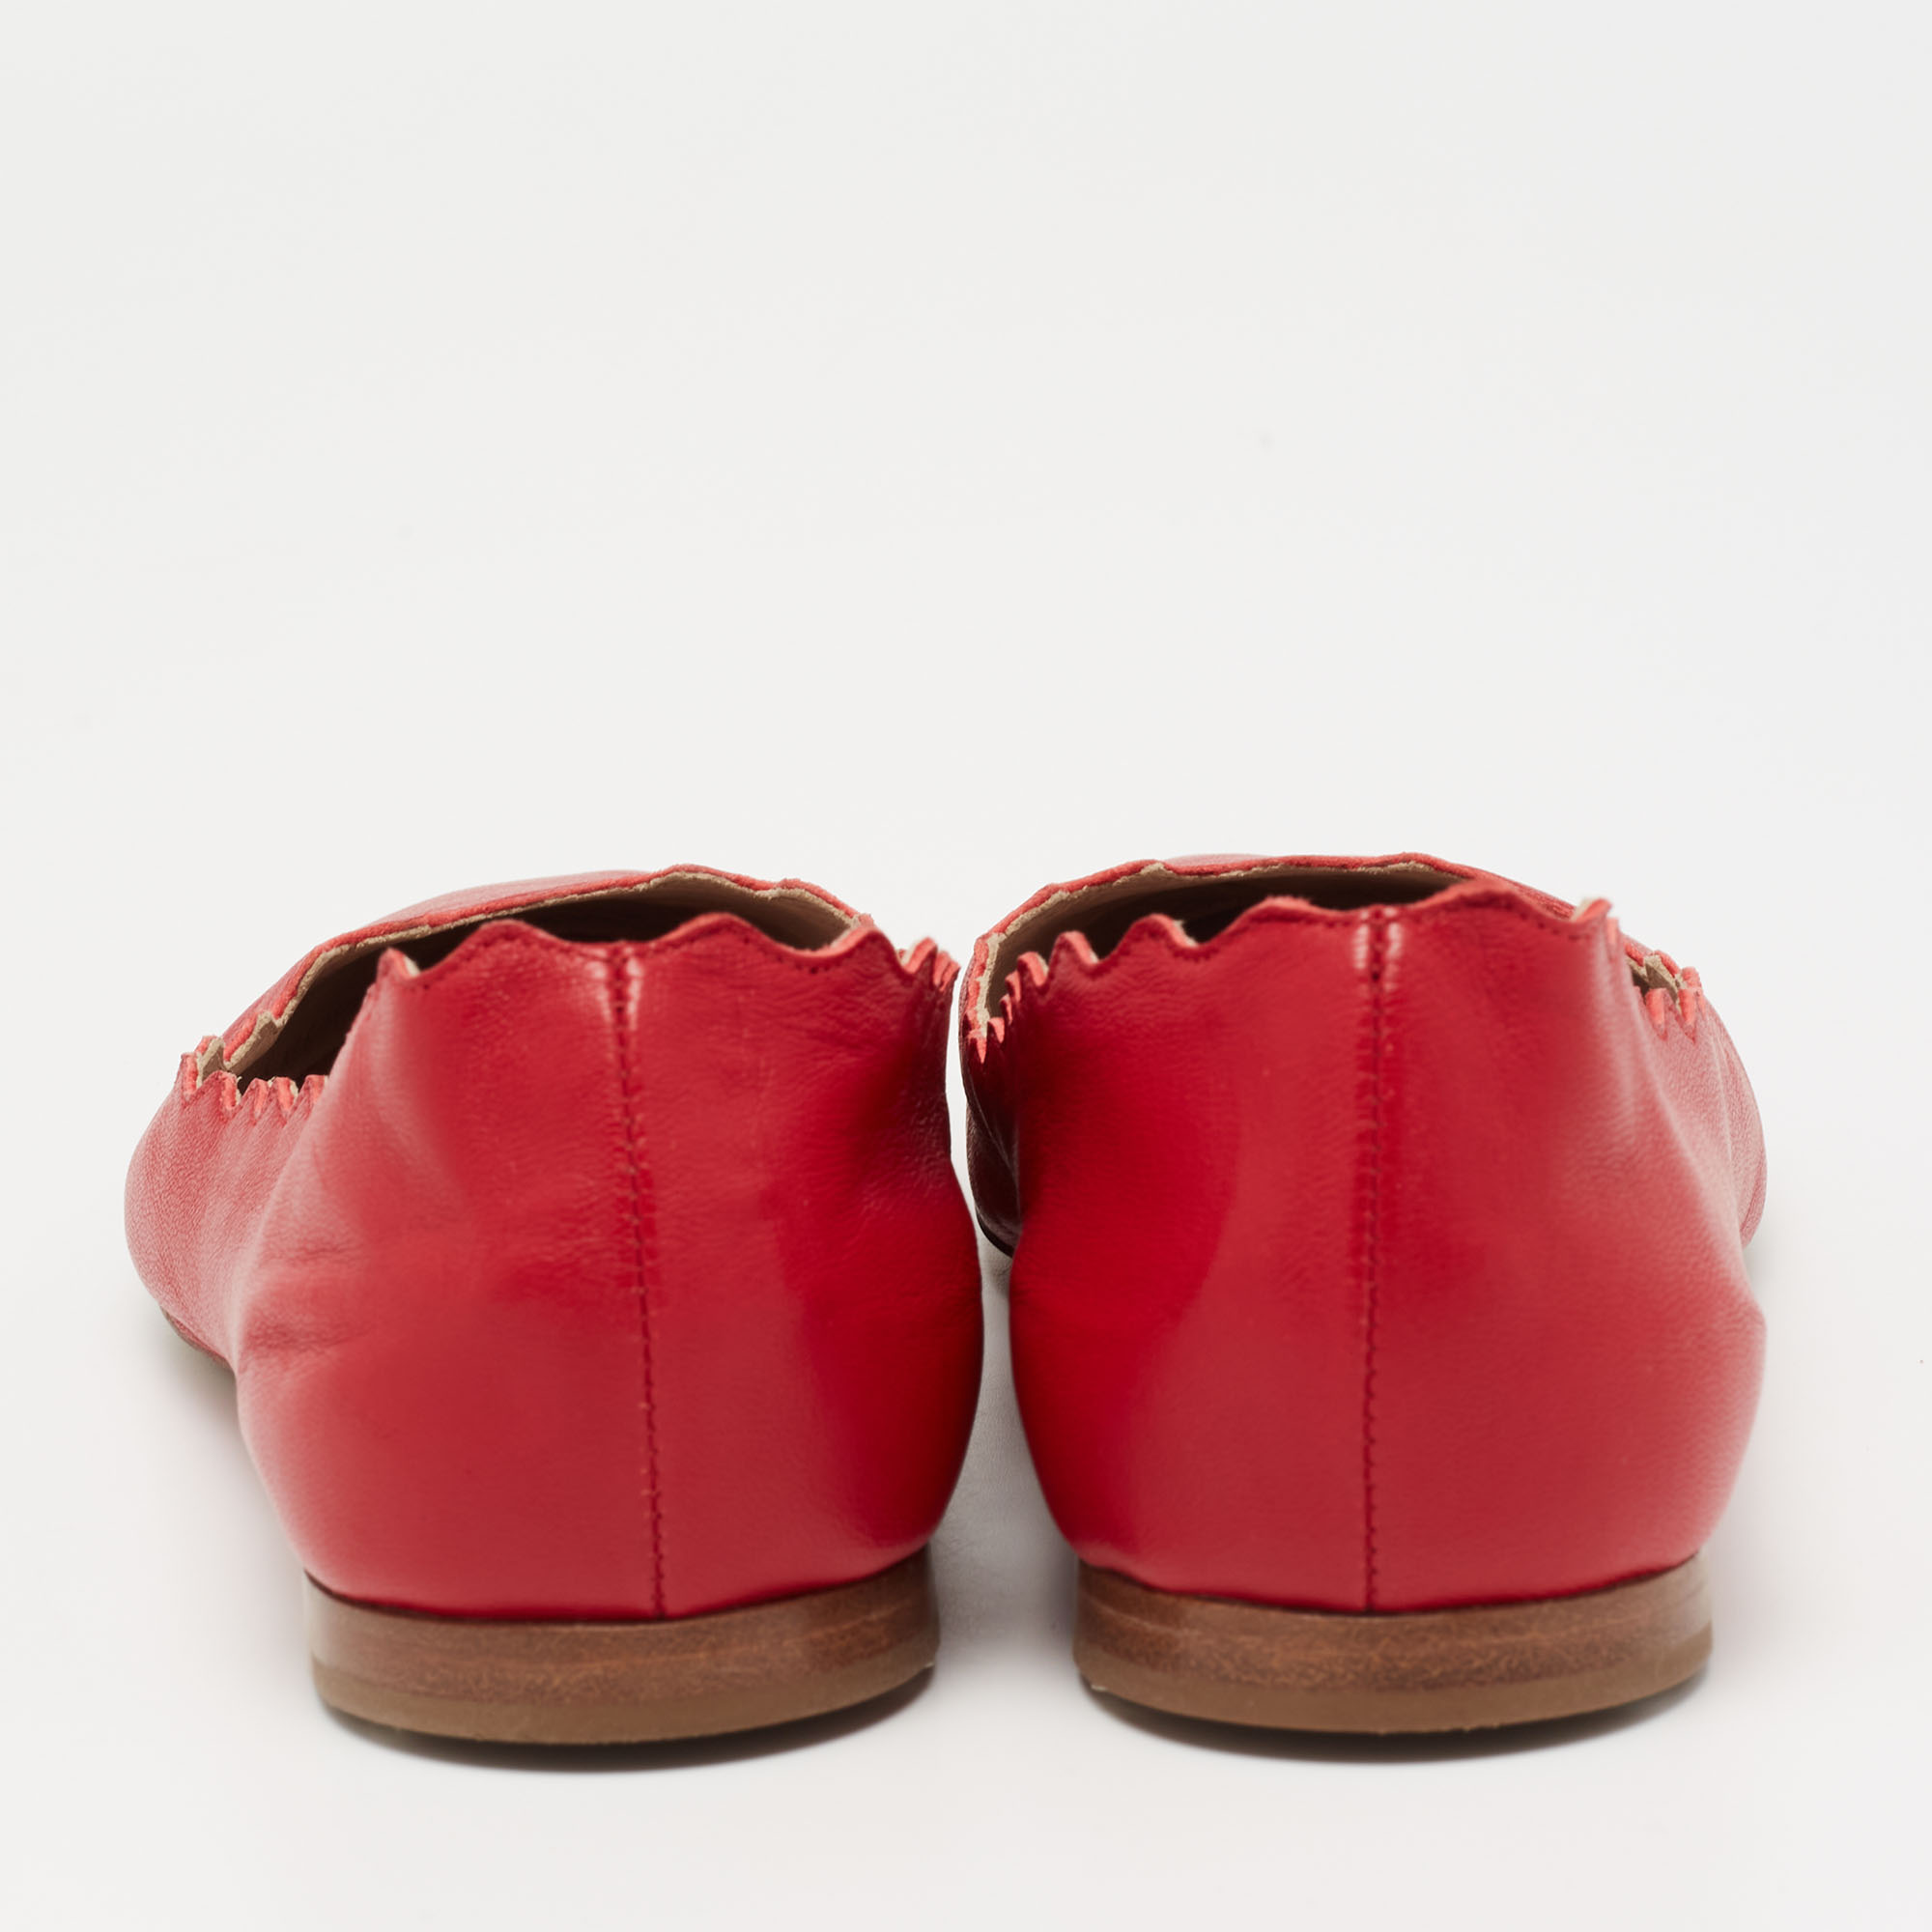 Chloe Red Leather Lauren Ballet Flats Size 36